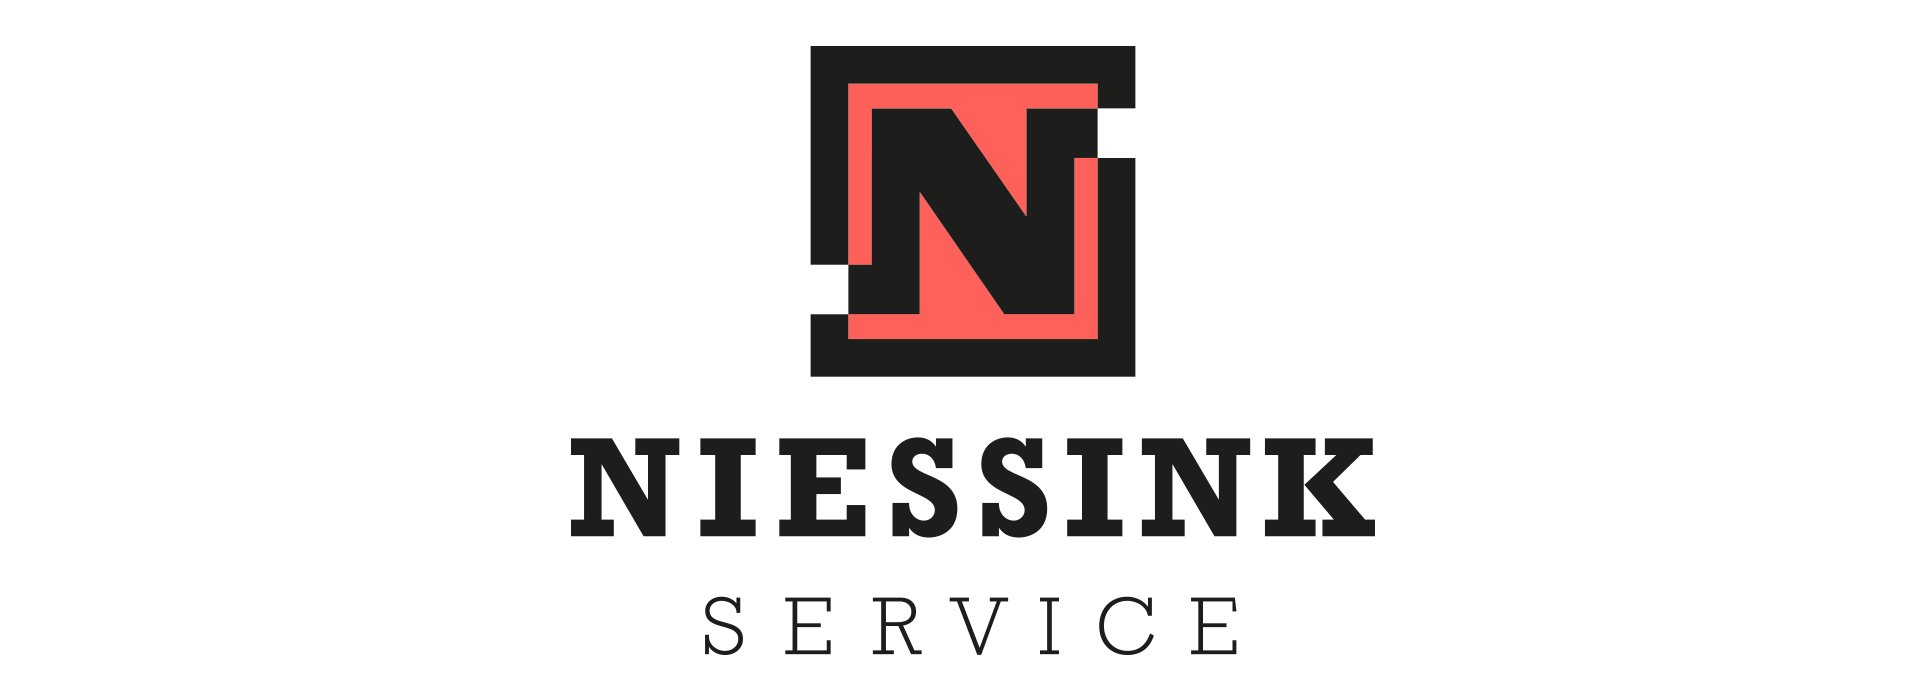 Meteenwerken - logo - Niessink - zonder achtergrond